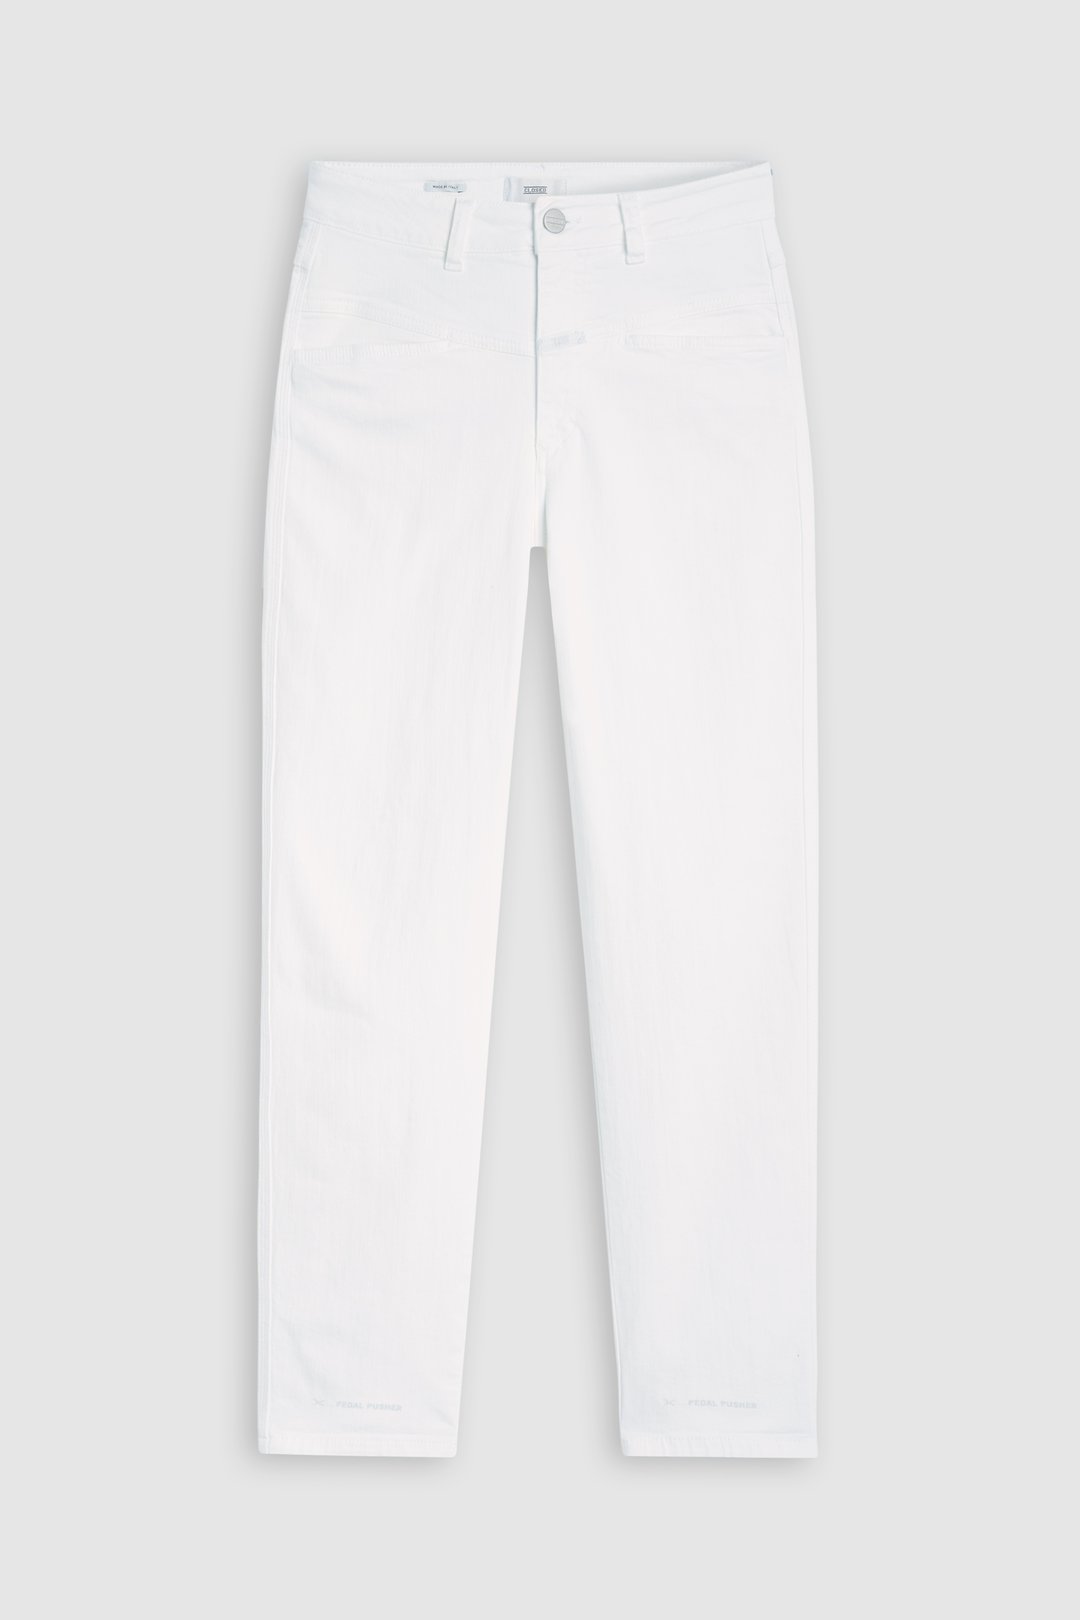 white stretch denim jeans